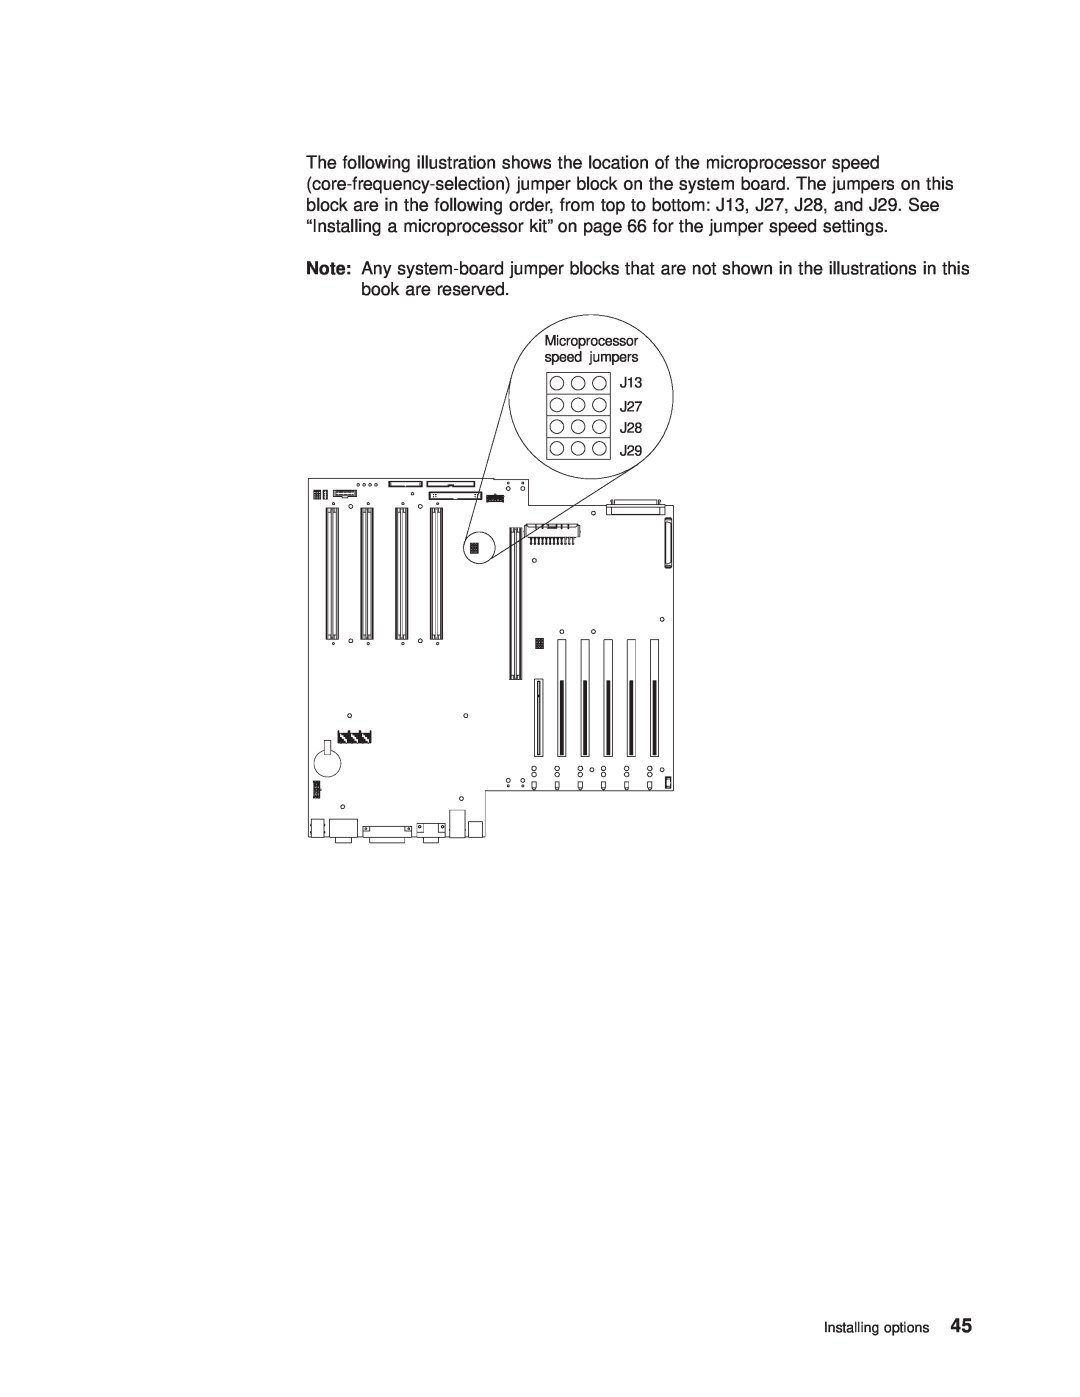 IBM 8682 manual Microprocessor speed jumpers 